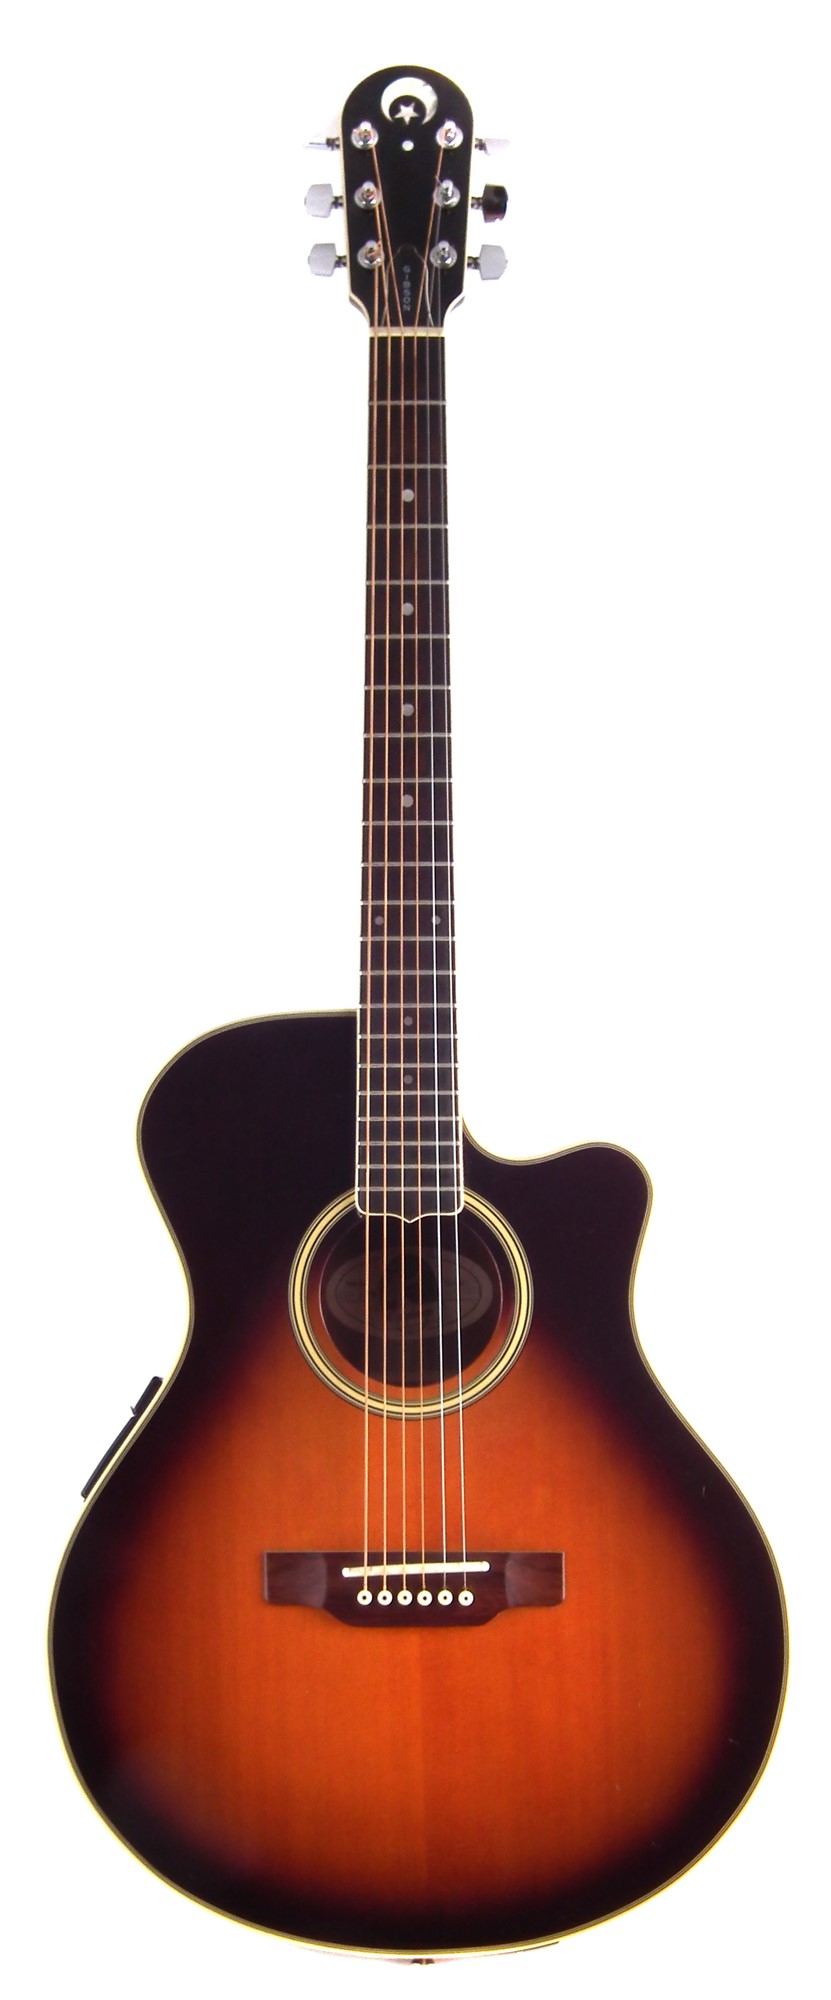 Lot 65 - Epiphone Orville steel string guitar EO-1VS,